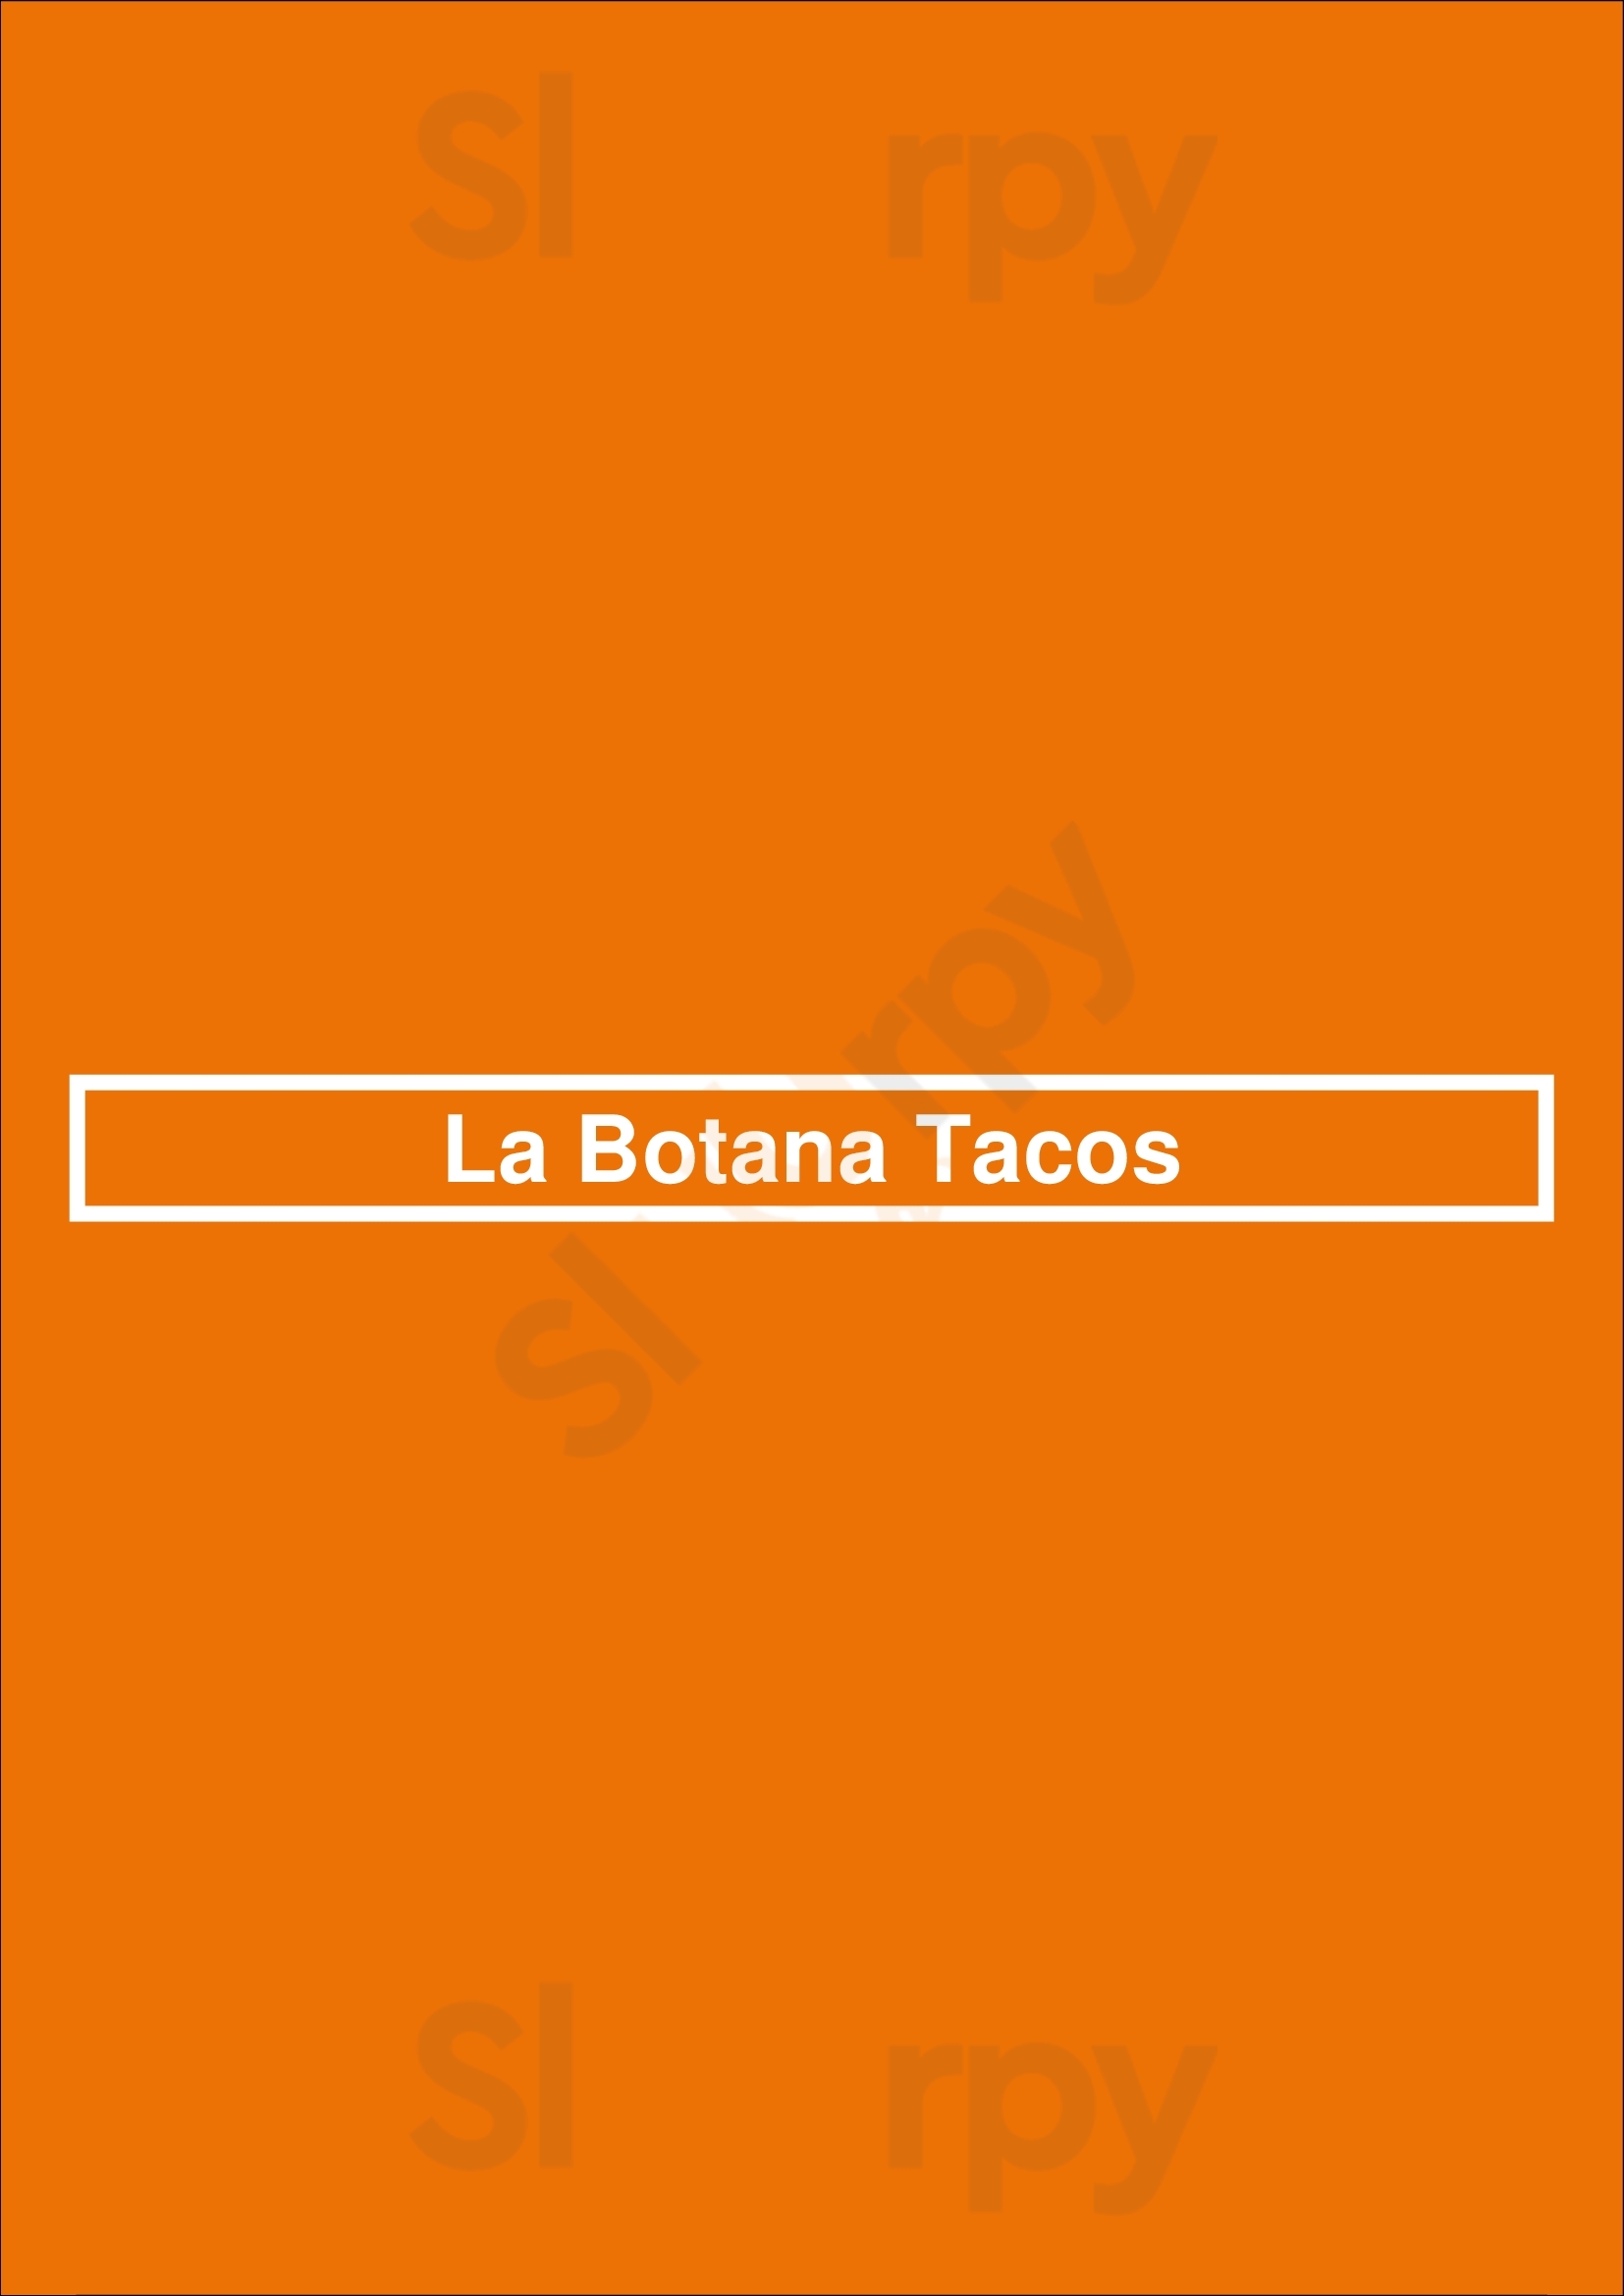 La Botana Tacos Tucson Menu - 1